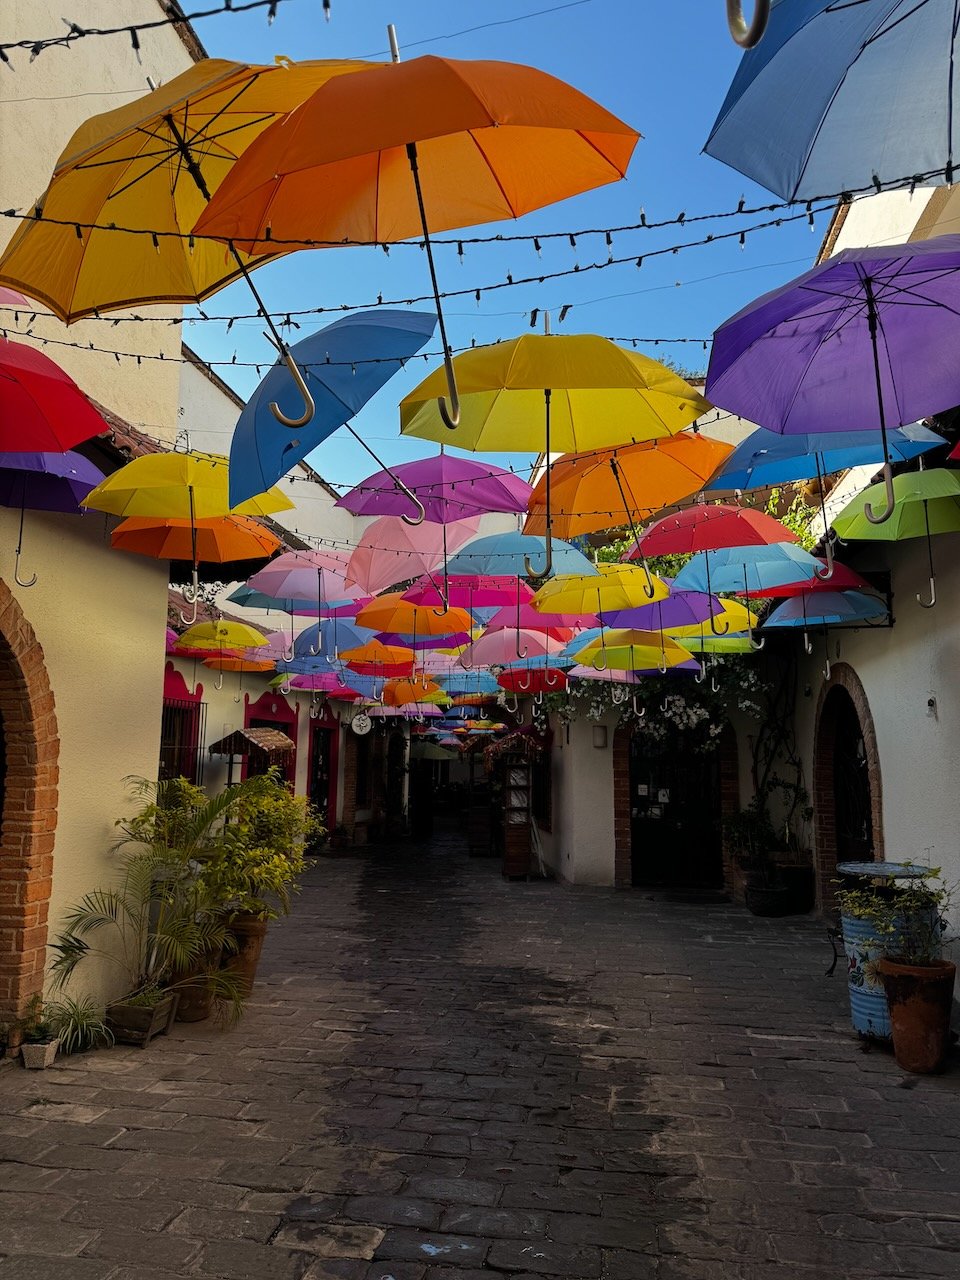 Umbrellas createe a canopy over an outdoor restaurant